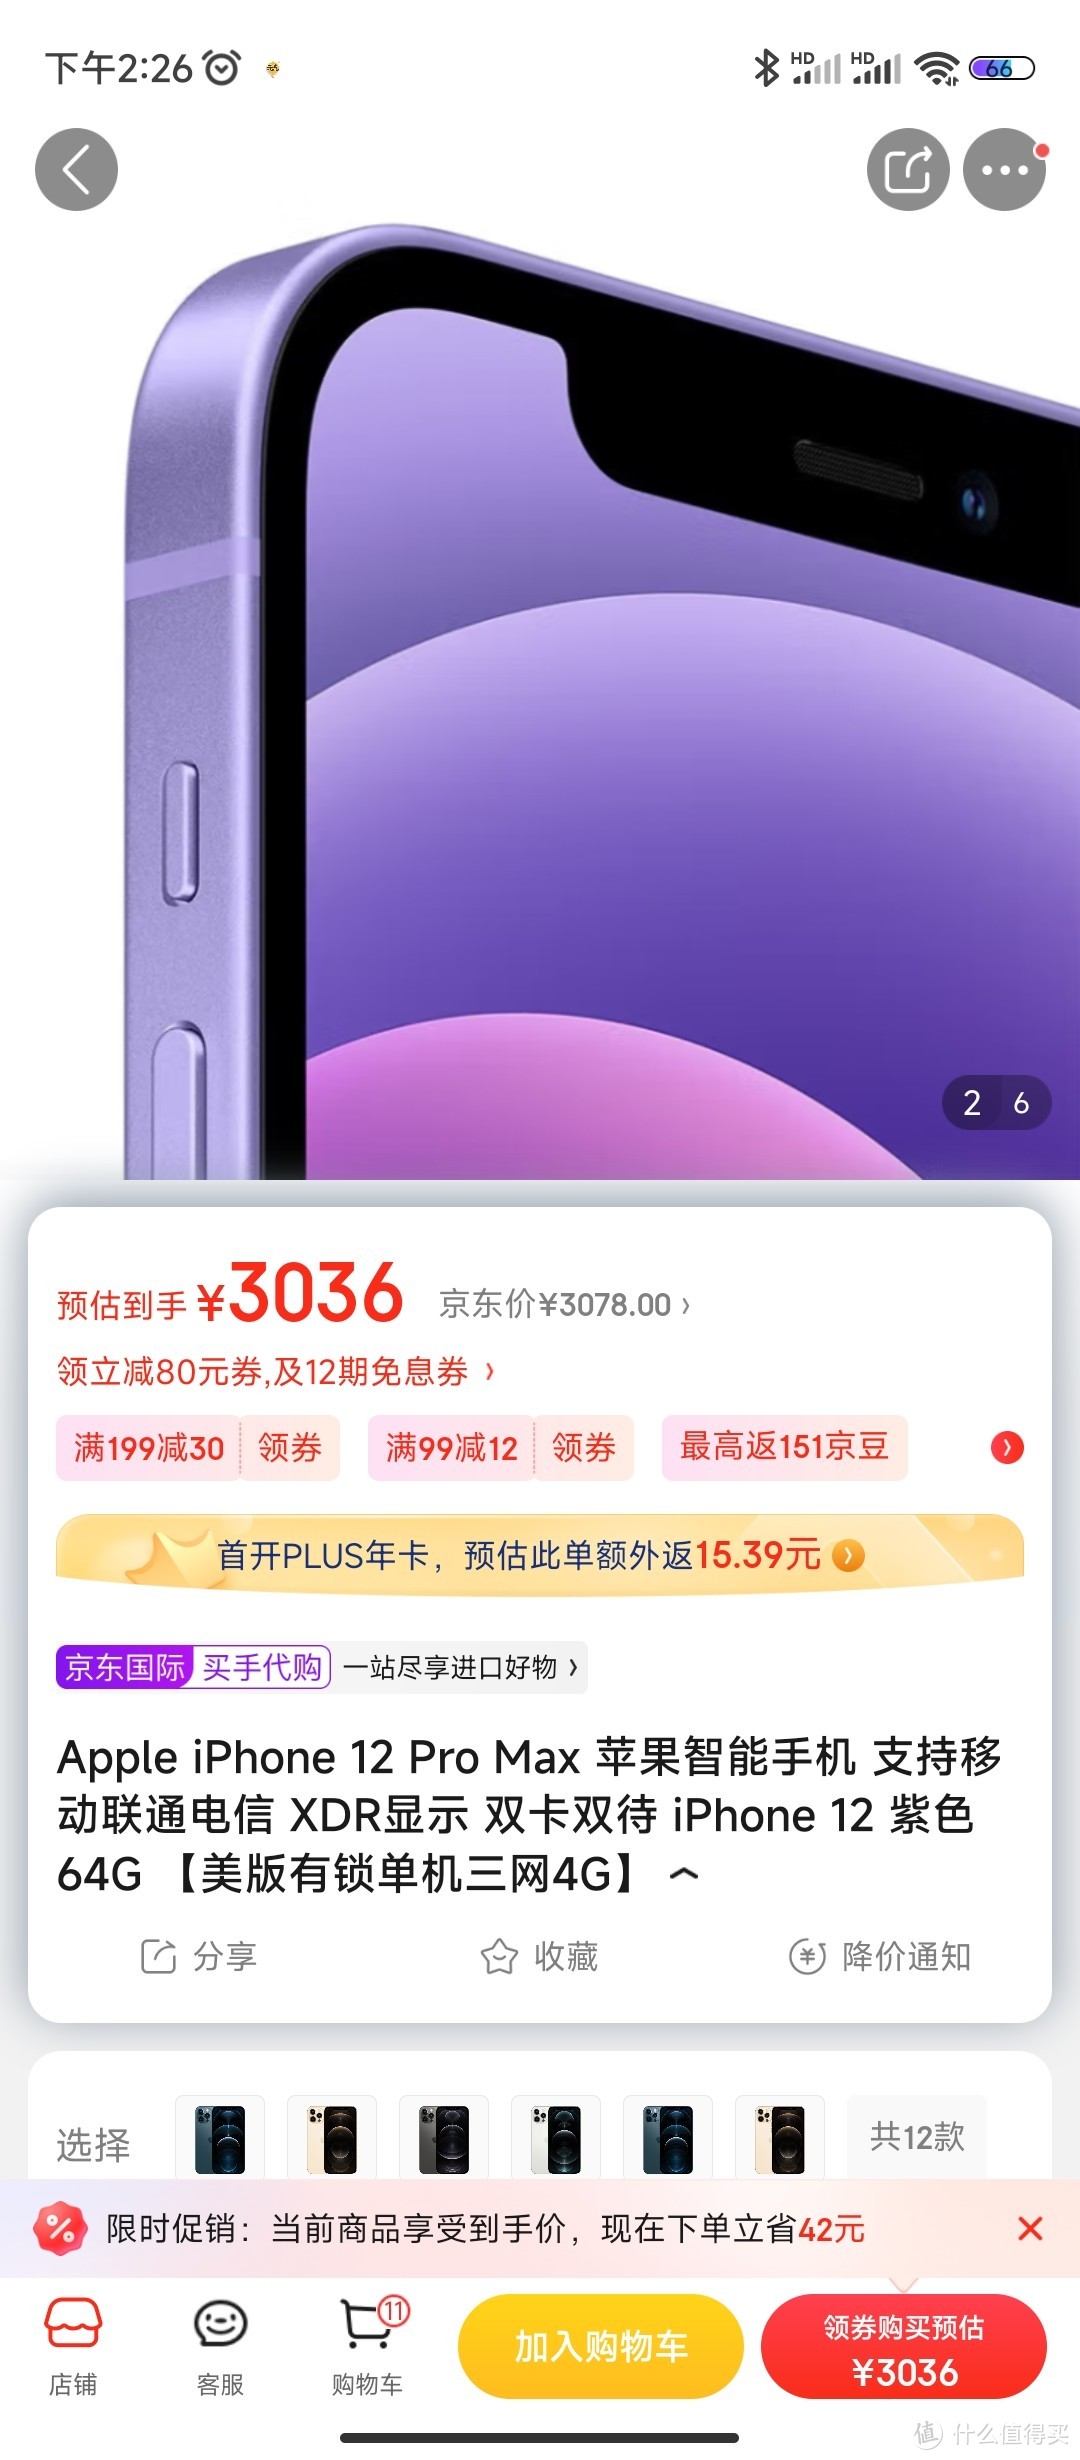 Apple iPhone 12 Pro Max 苹果智能手机 支持移动联通电信 XDR显示 双卡双待 iPhone 12 紫色 64G 【美版有Apple